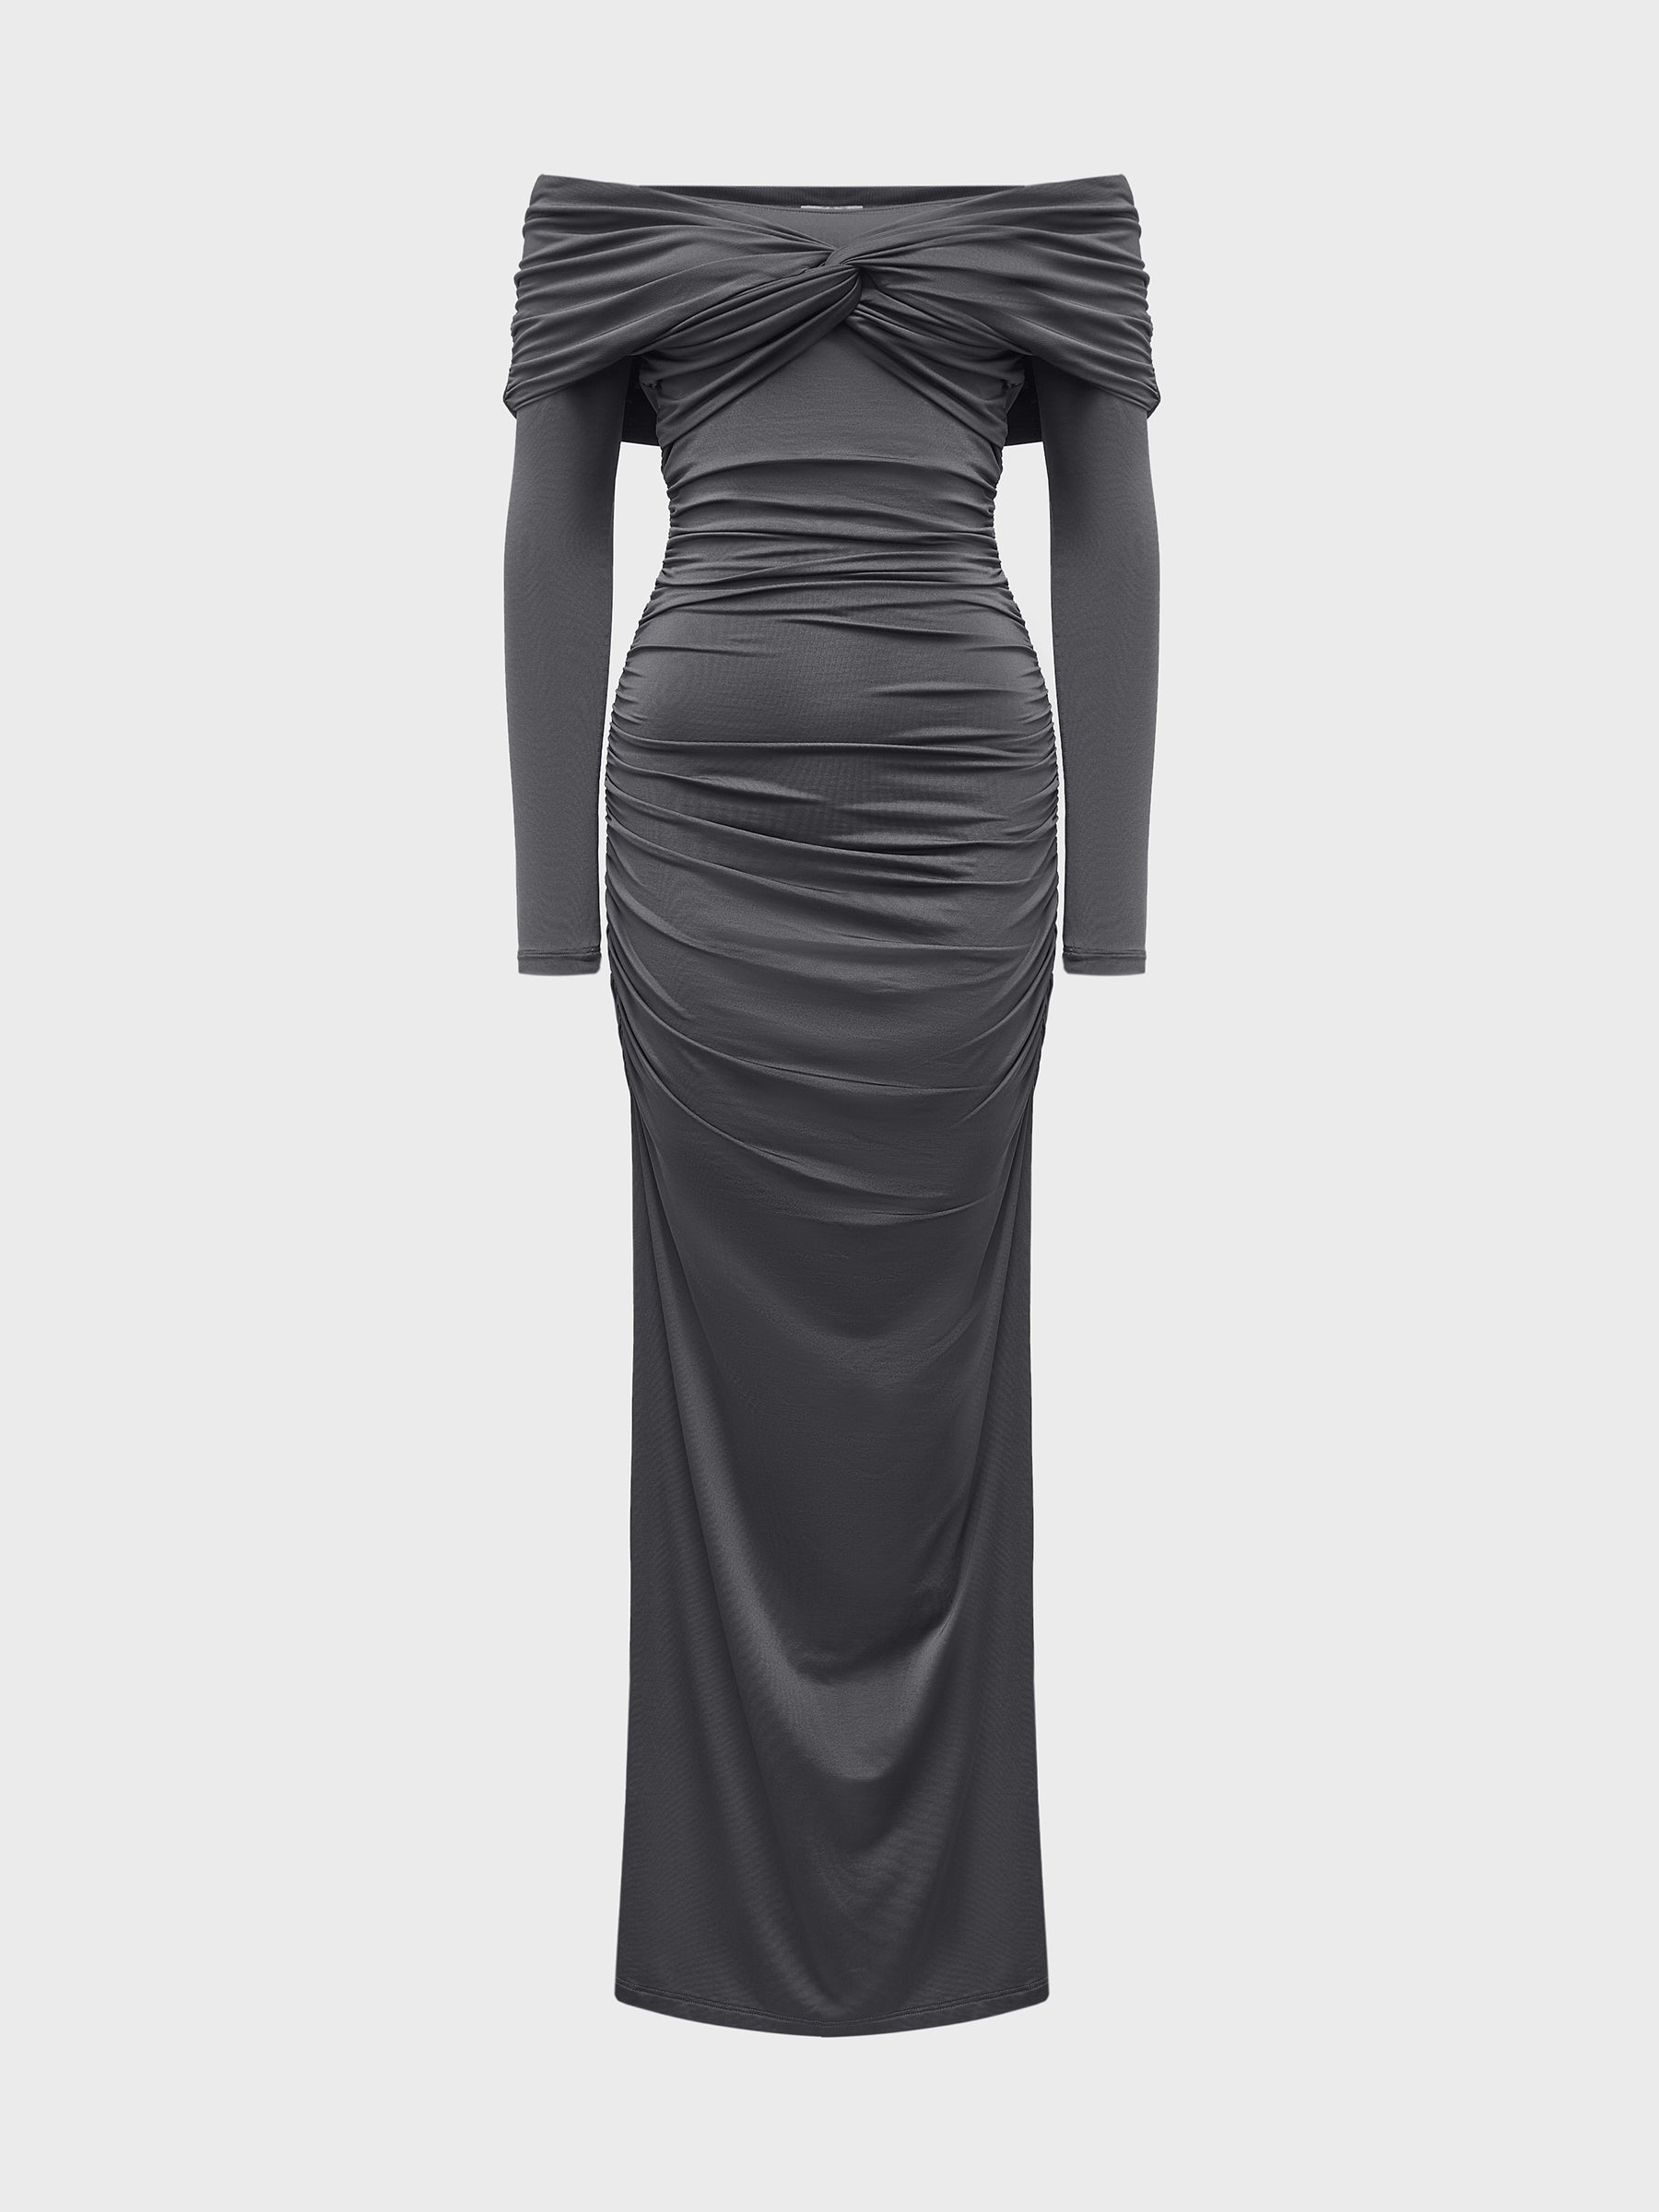 Bardot neckline dress